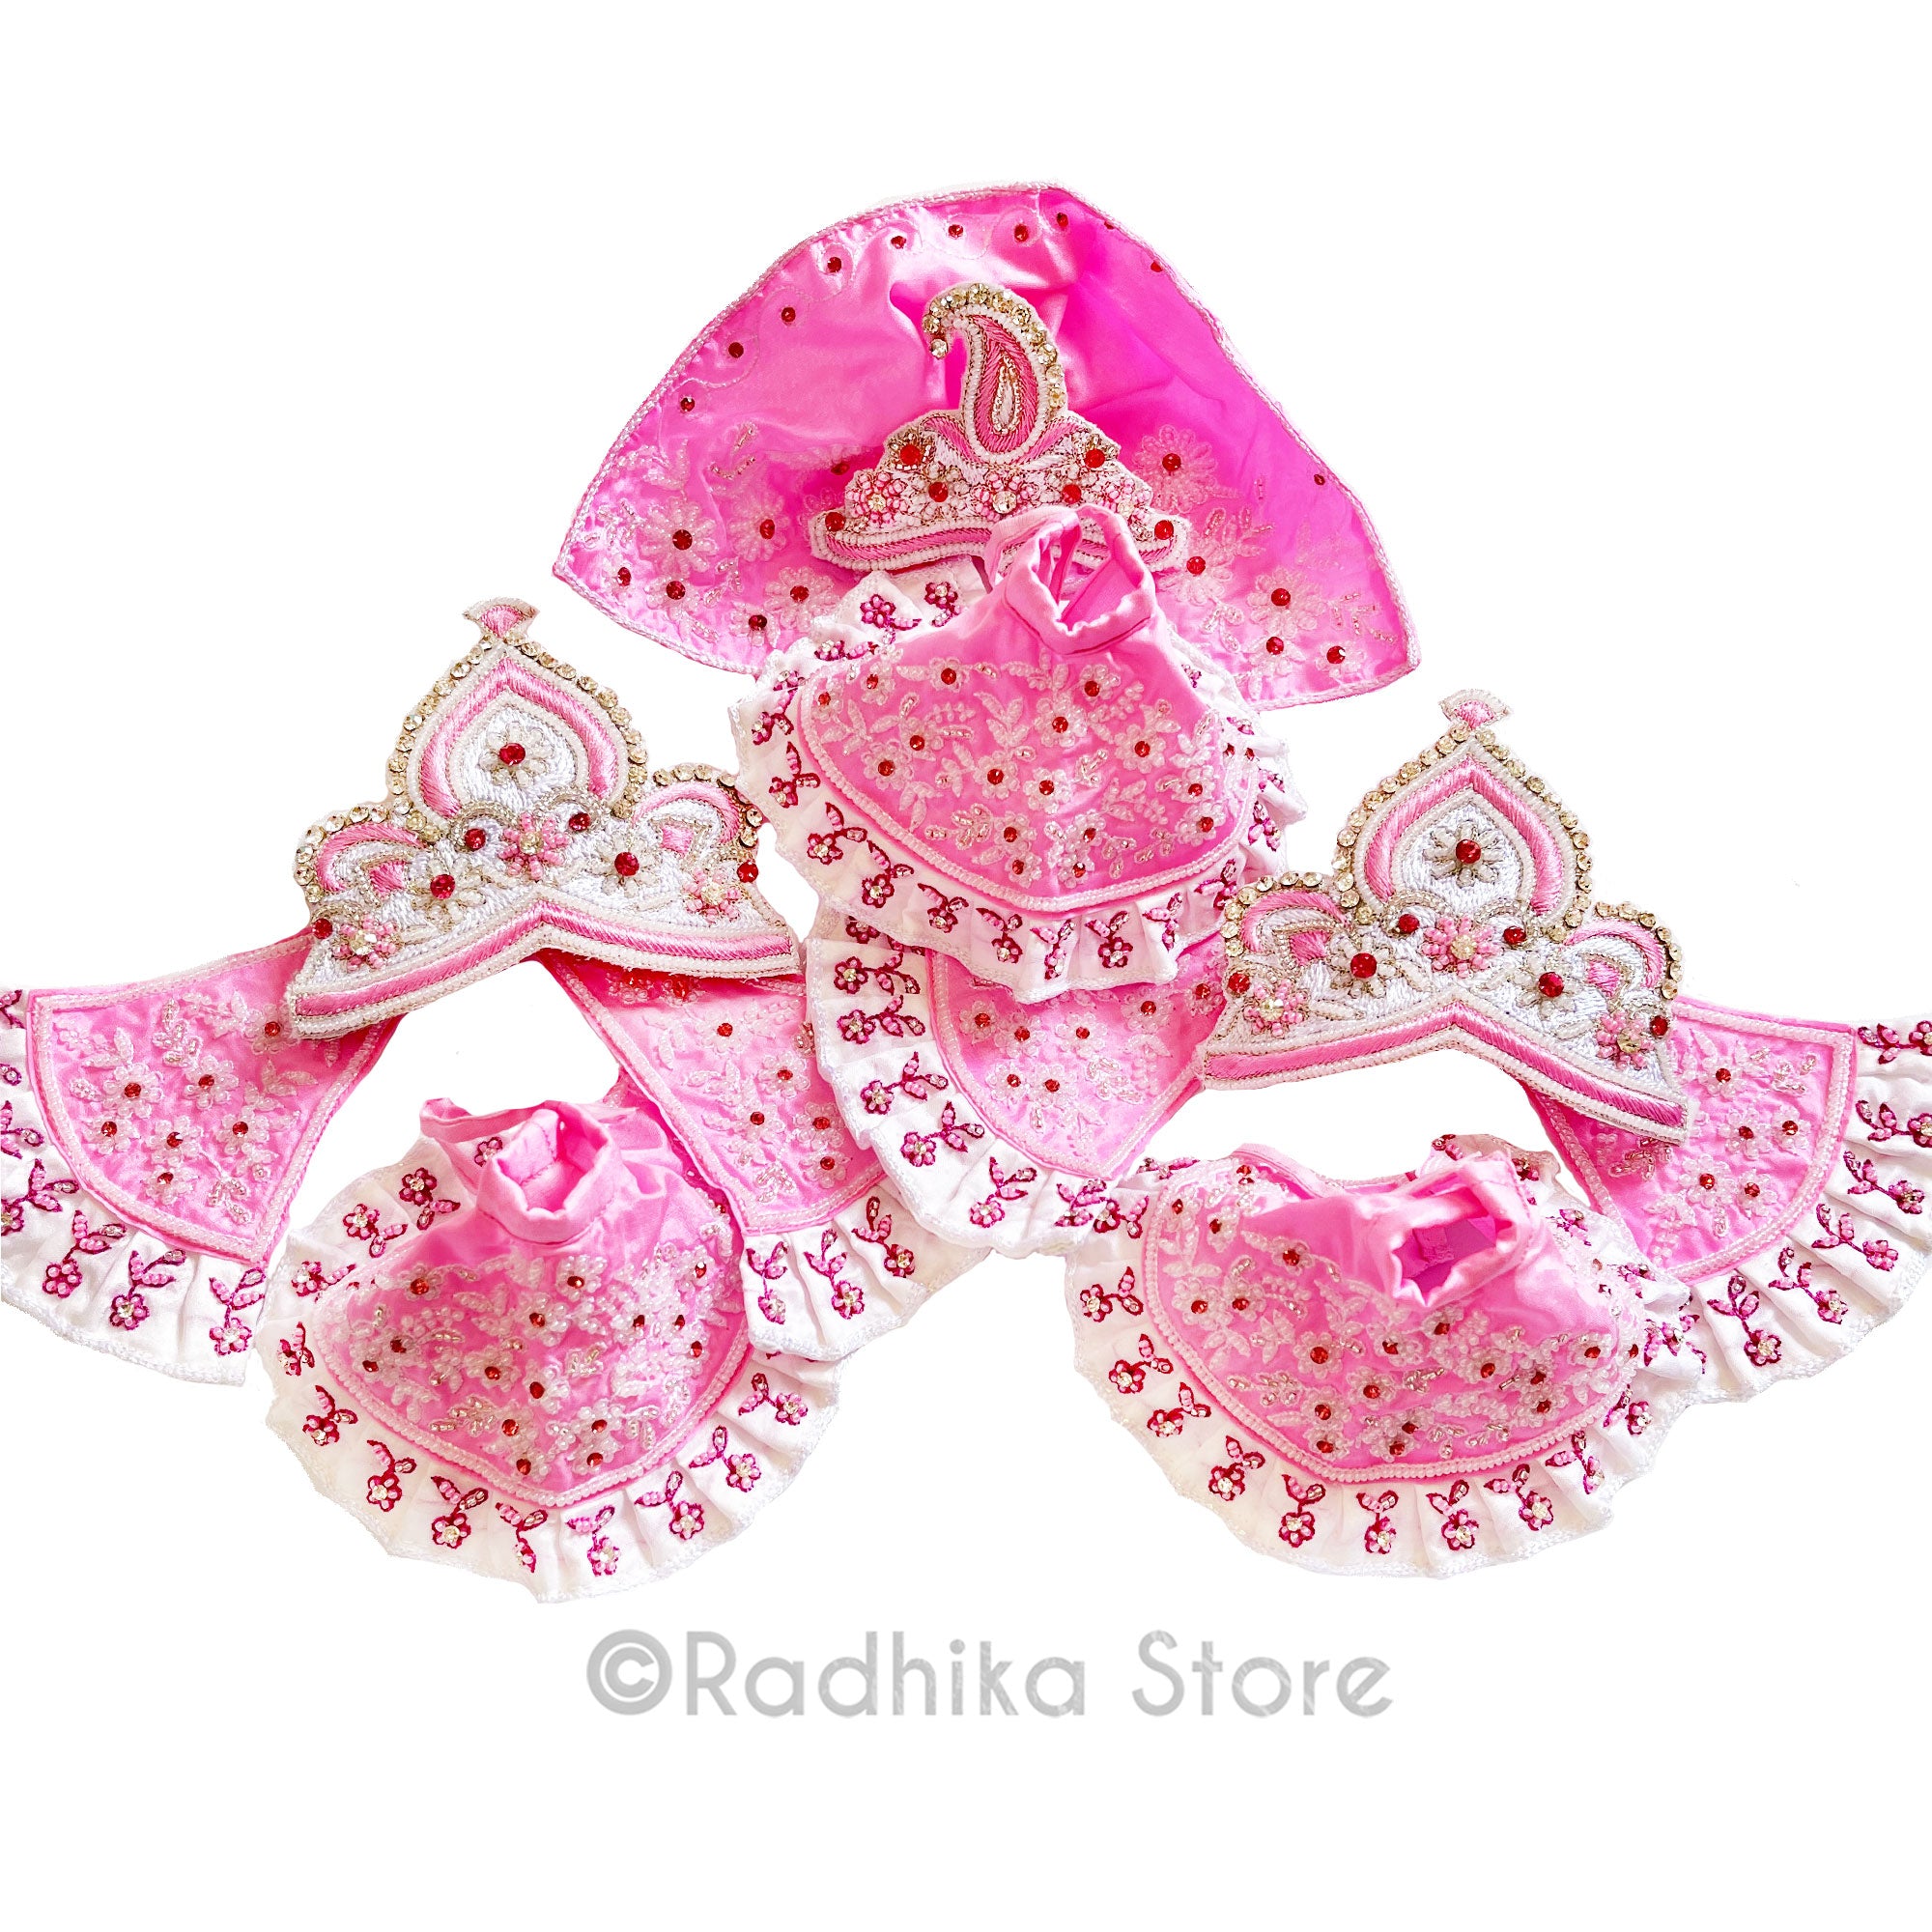 Madhuram - Pink - Silk - Jagannath Baladeva Subhadra Deity Outfit